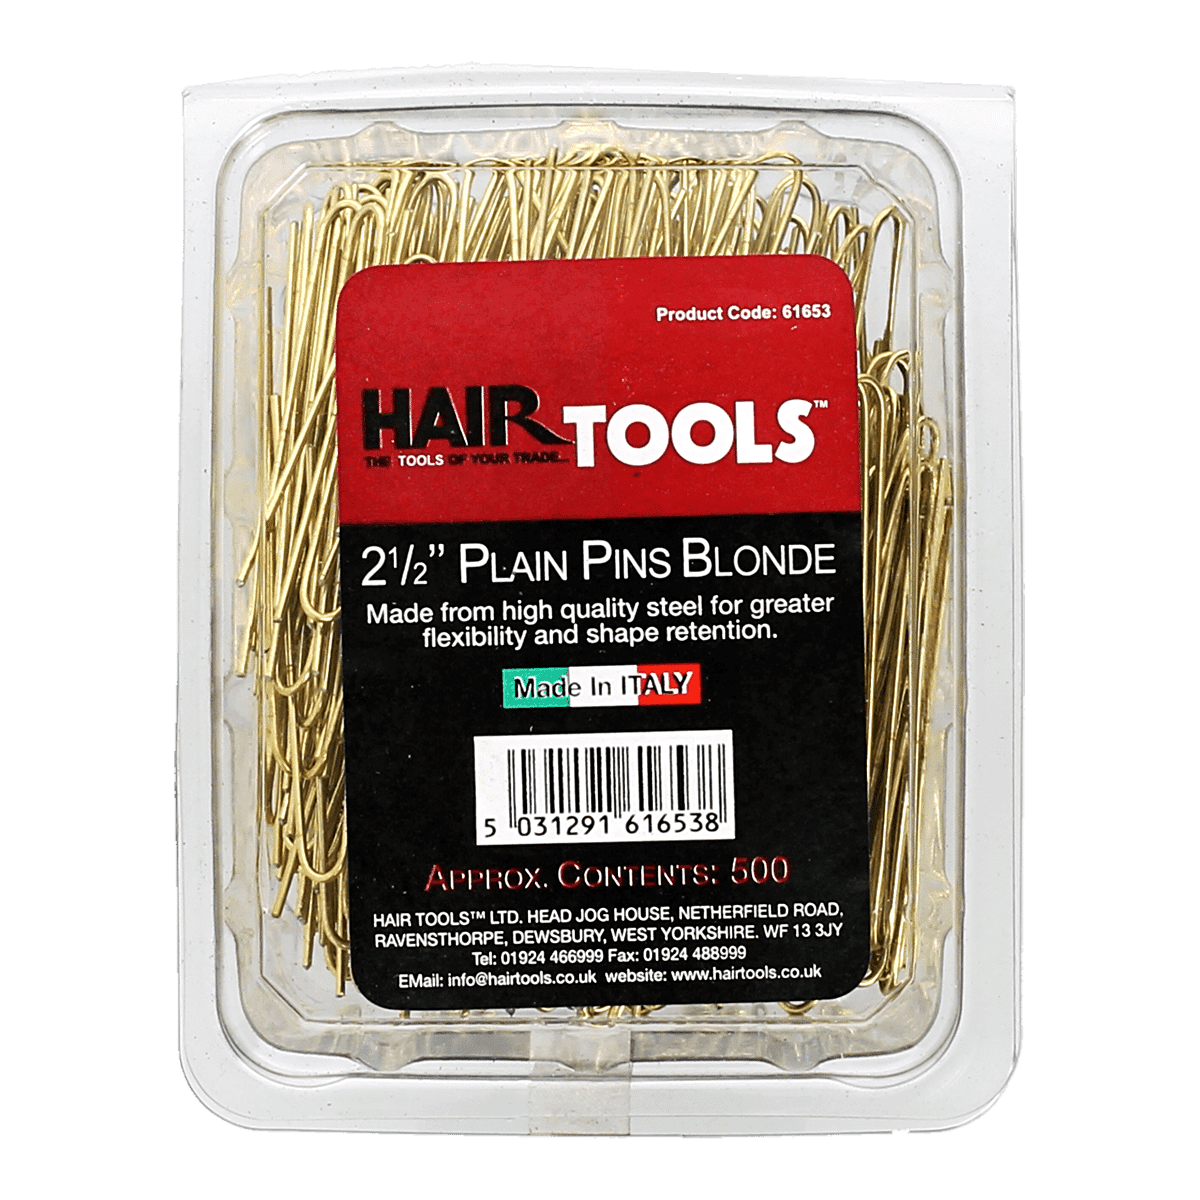 Hair Tools 2.5" Plain Pins Blonde (Box of 500)